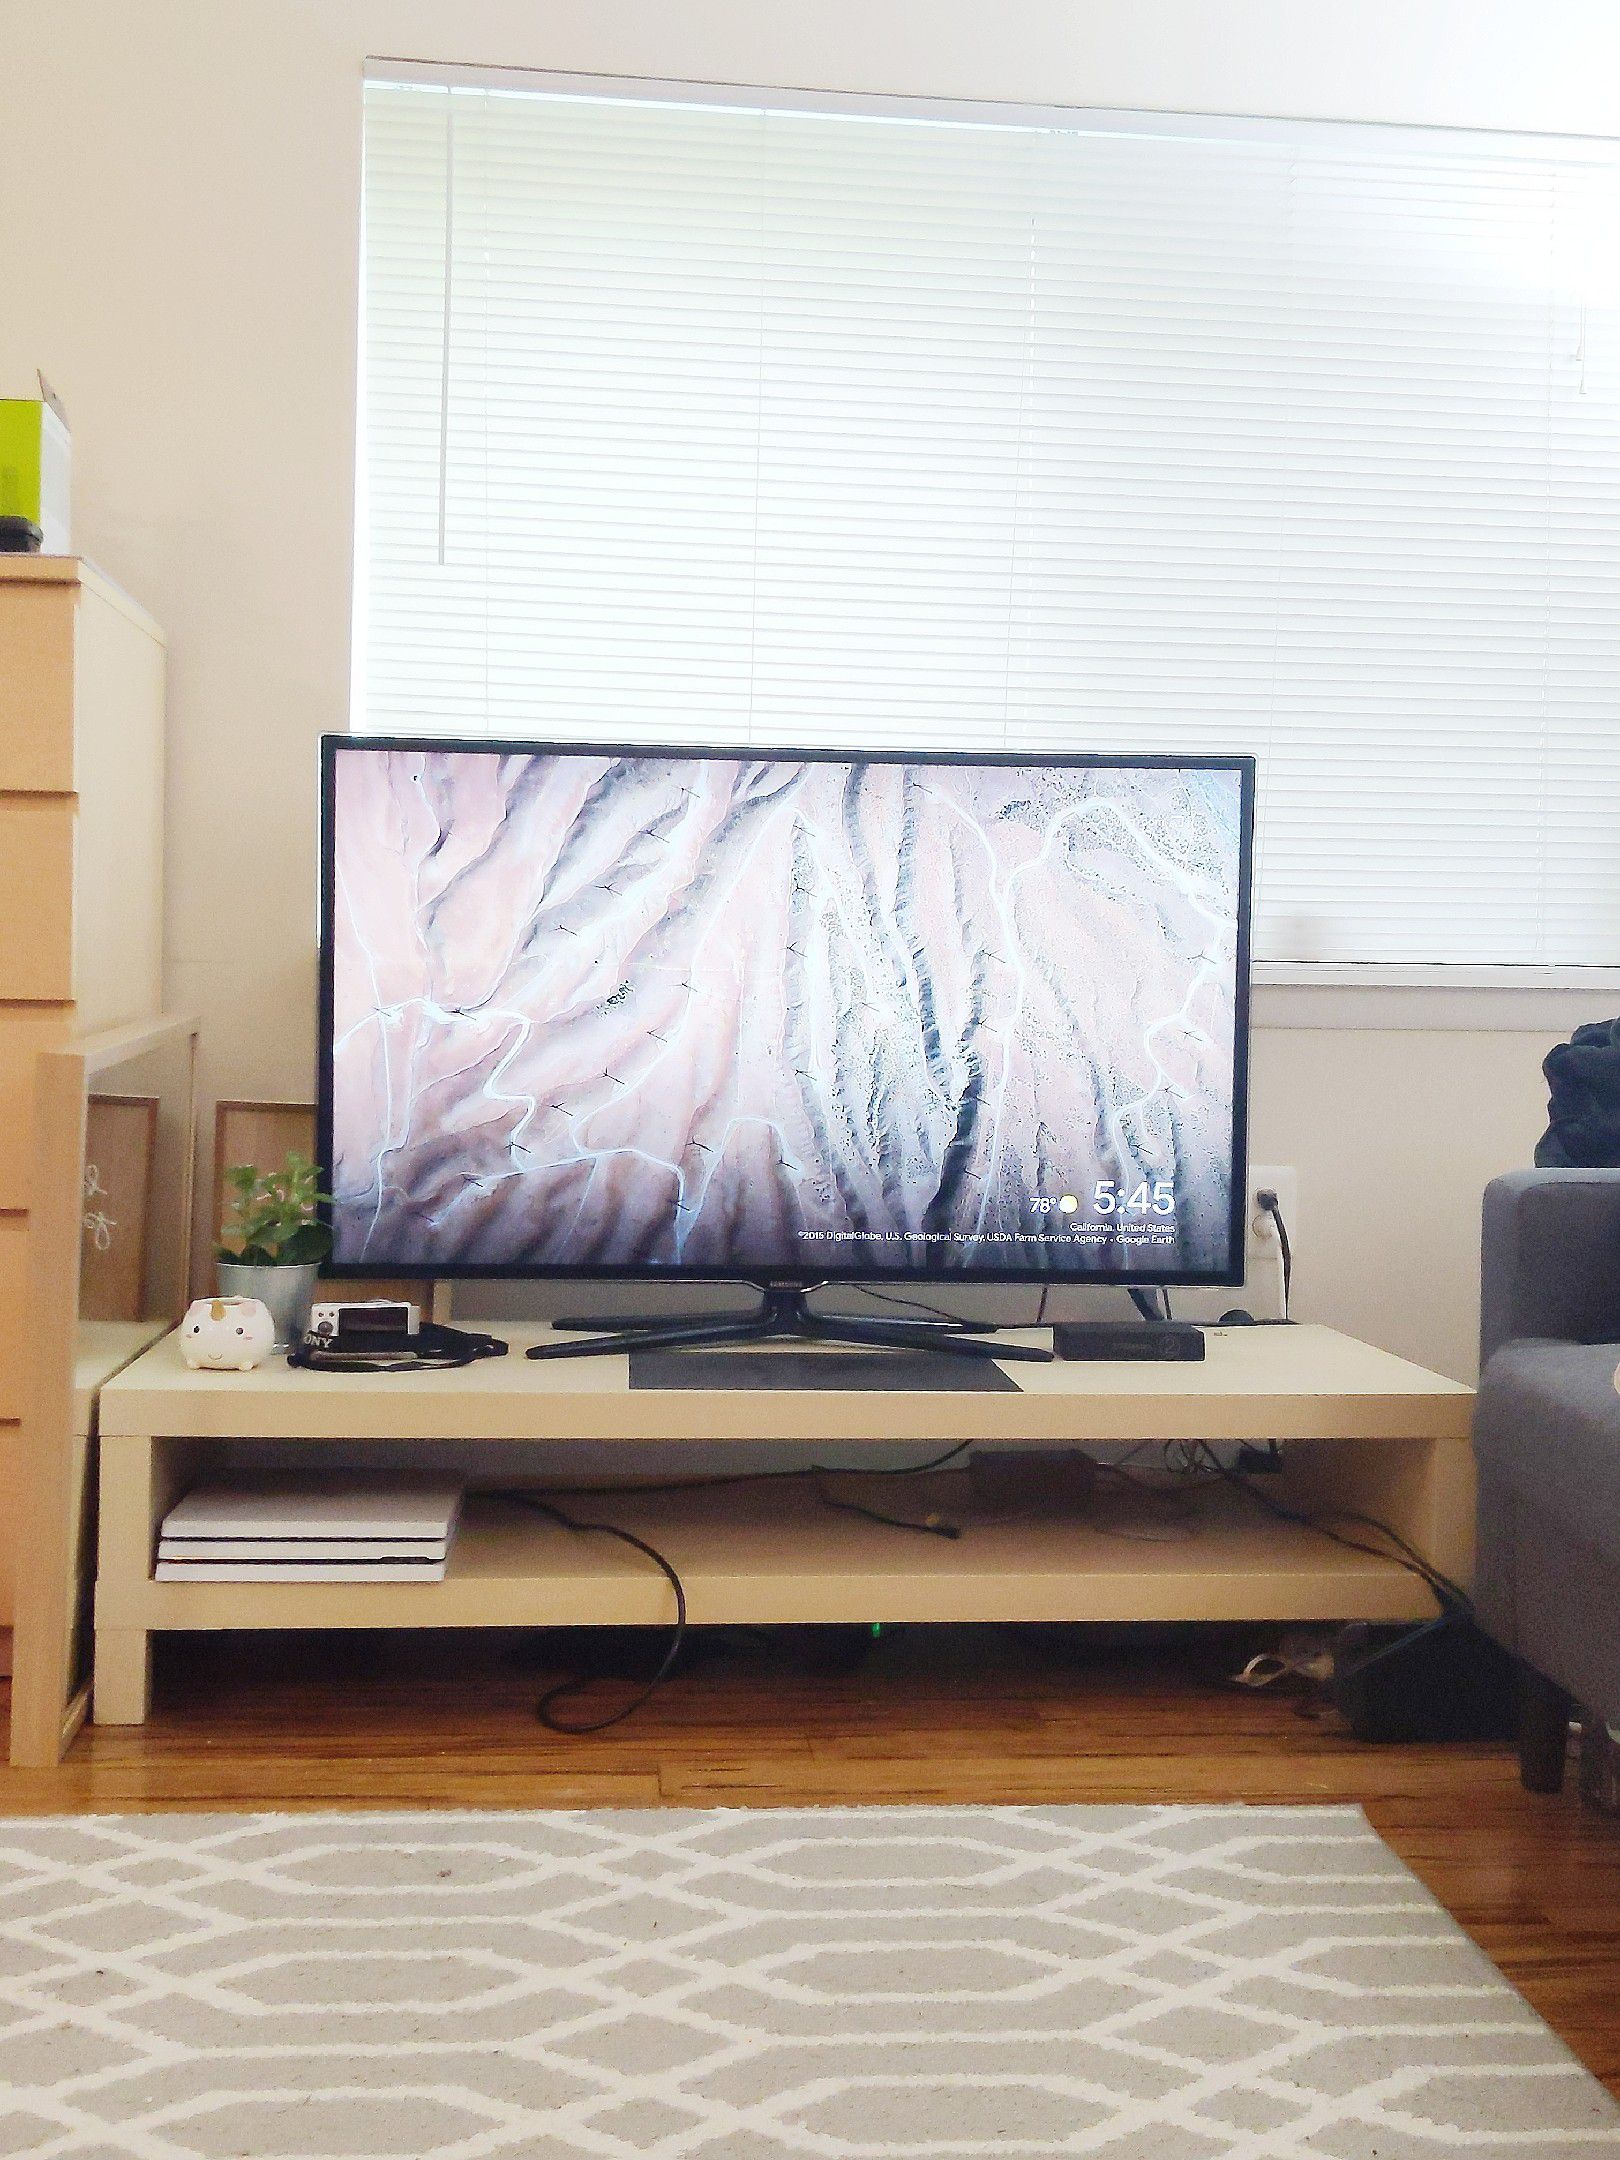 IKEA TV UNIT STAND